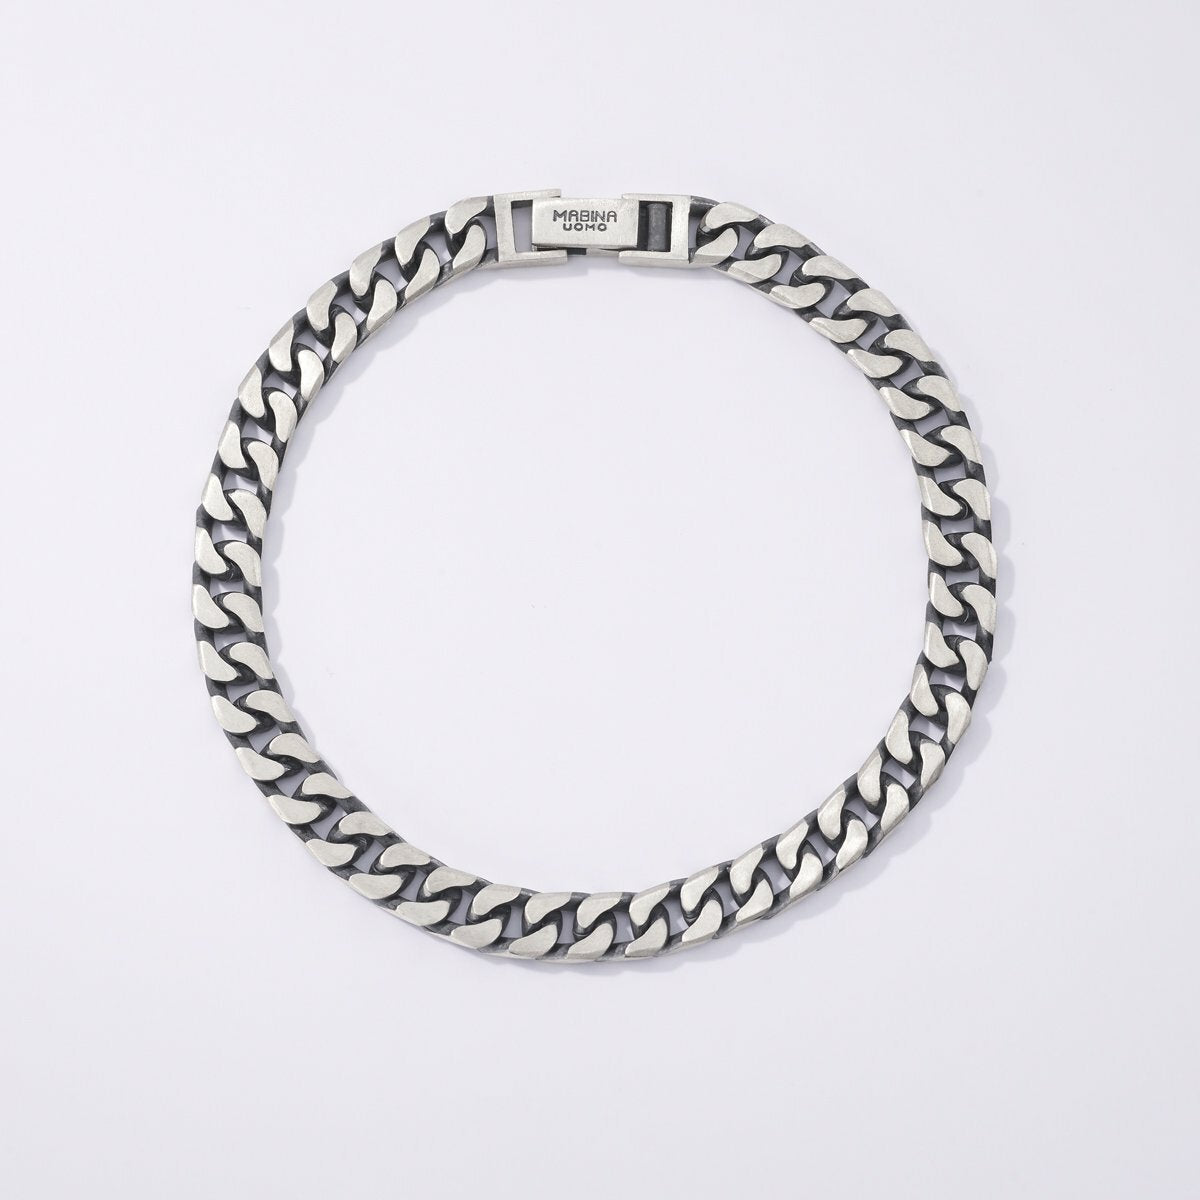 Groumette Men's bracelet in silver Mabina Gioielli 533421-M